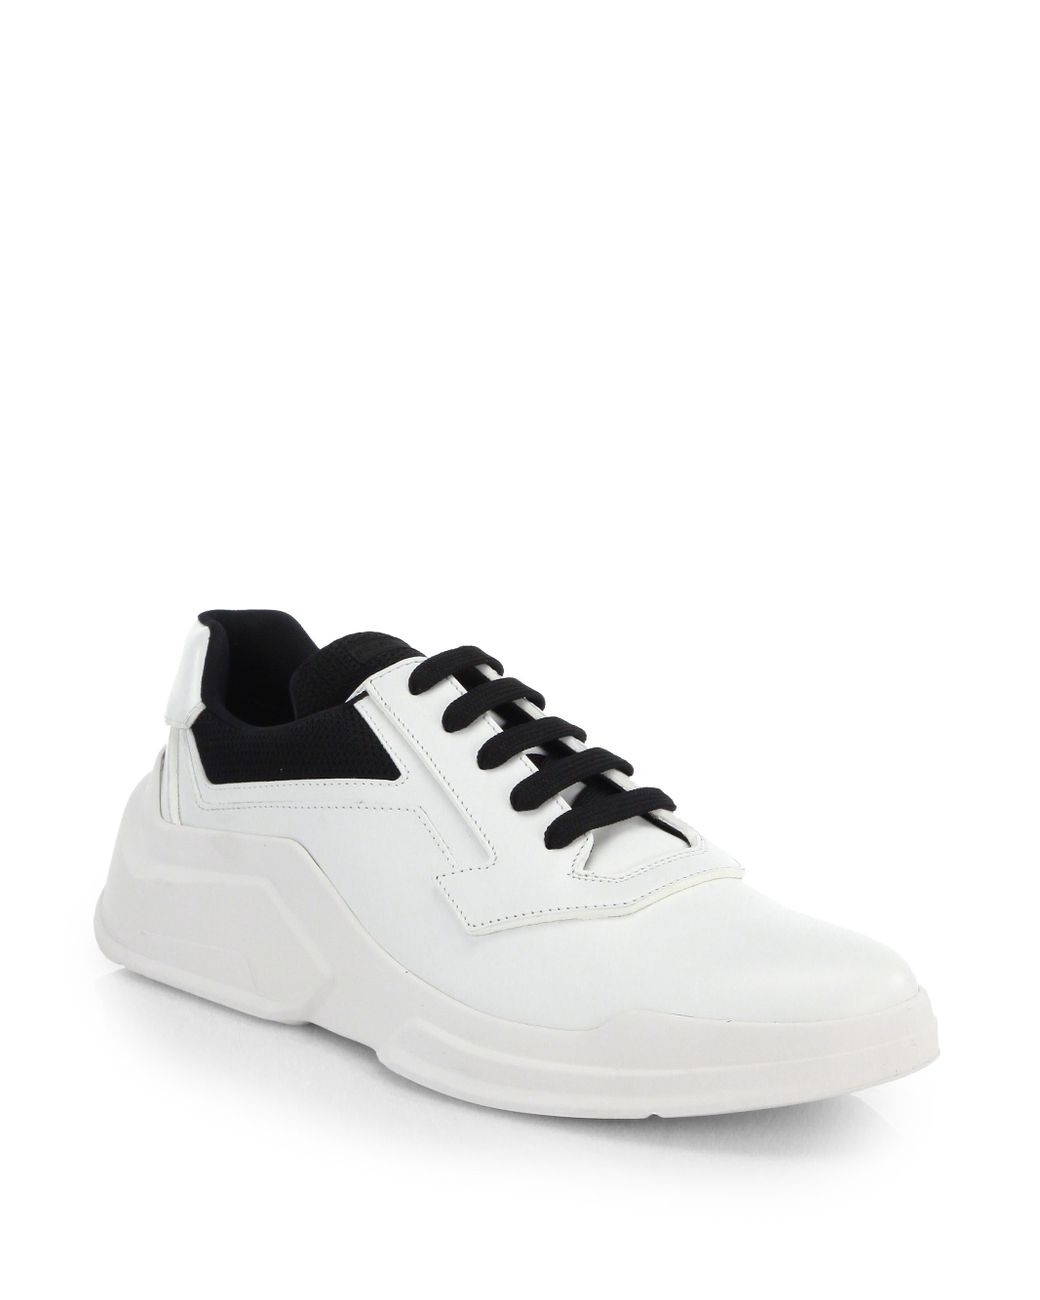 Prada Men's White Spazzolato Laced Sneakers